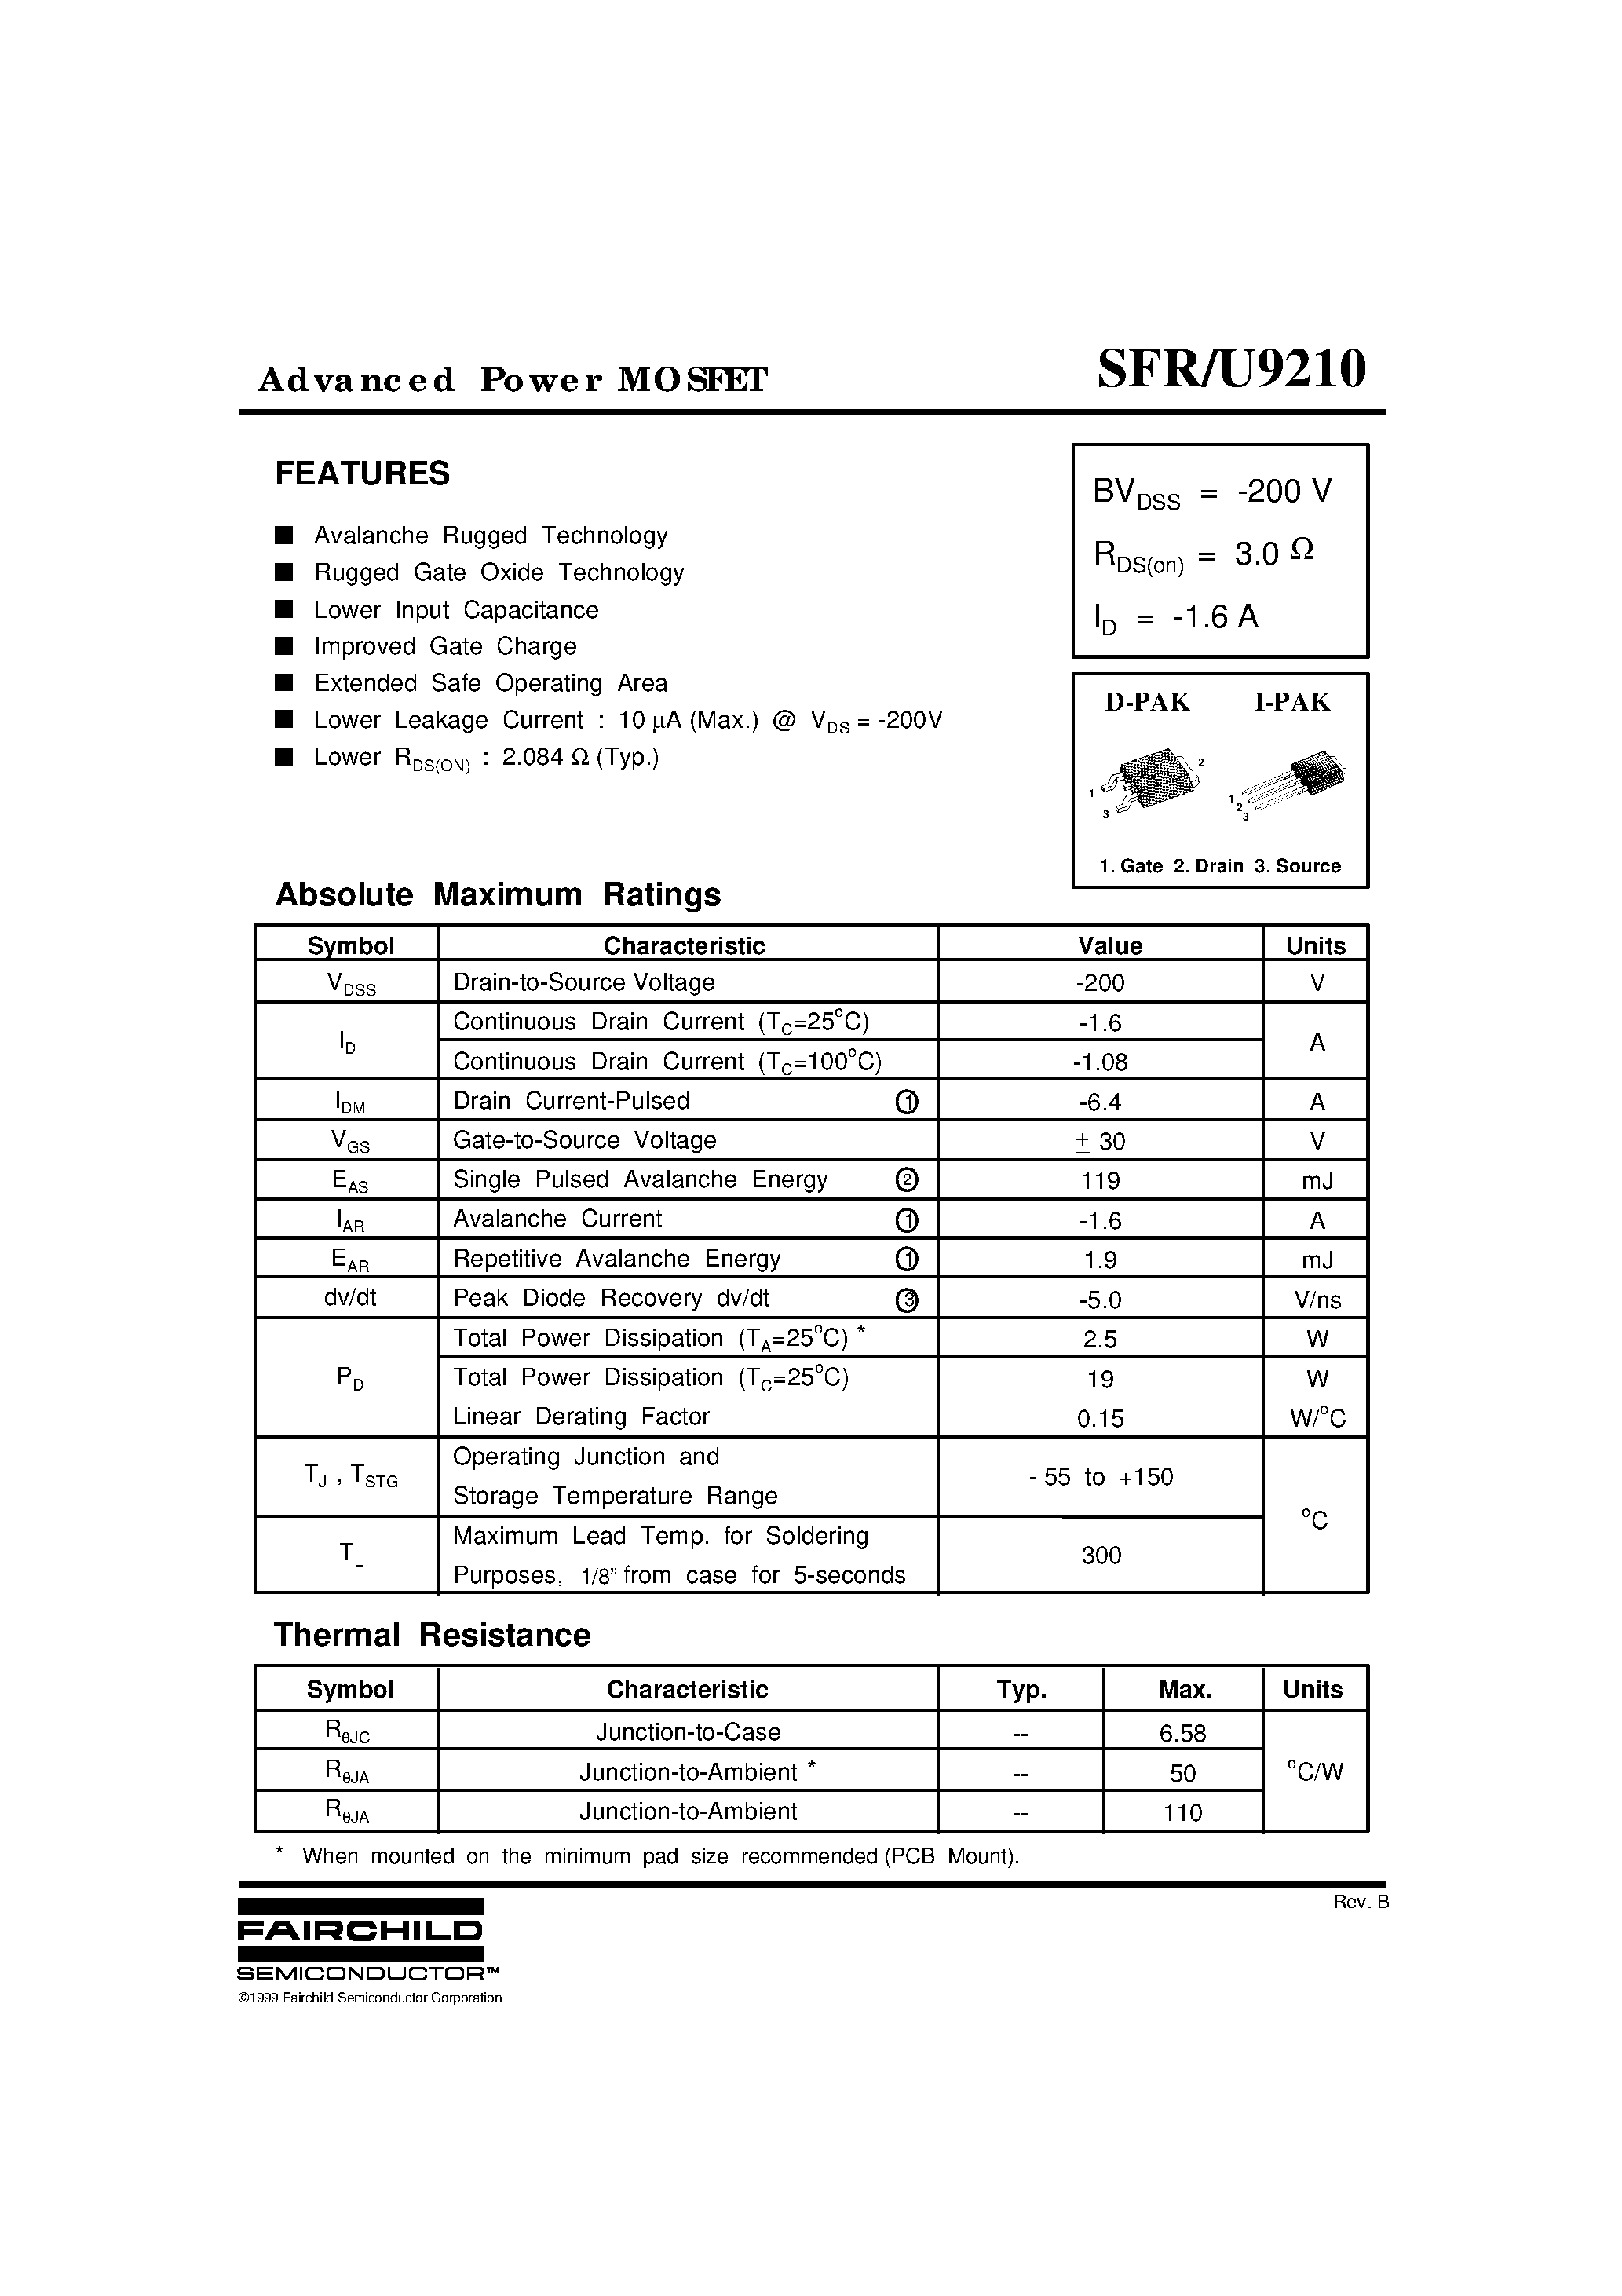 Даташит SFRU9210 - Advanced Power MOSFET страница 1